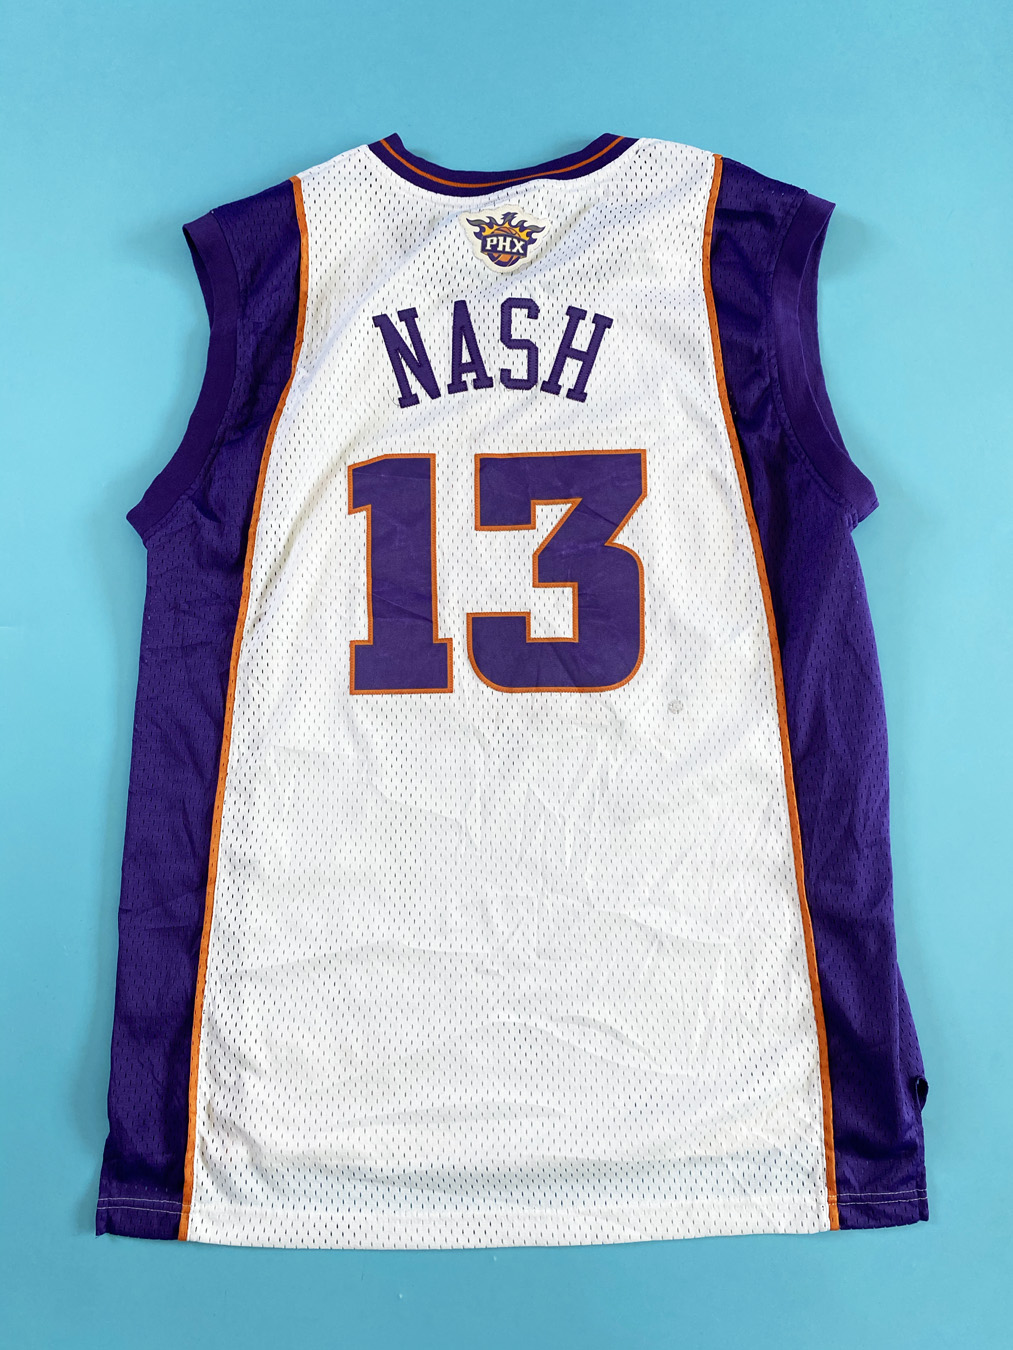 Adidas Phoenix Suns Steve Nash Home Game Jersey